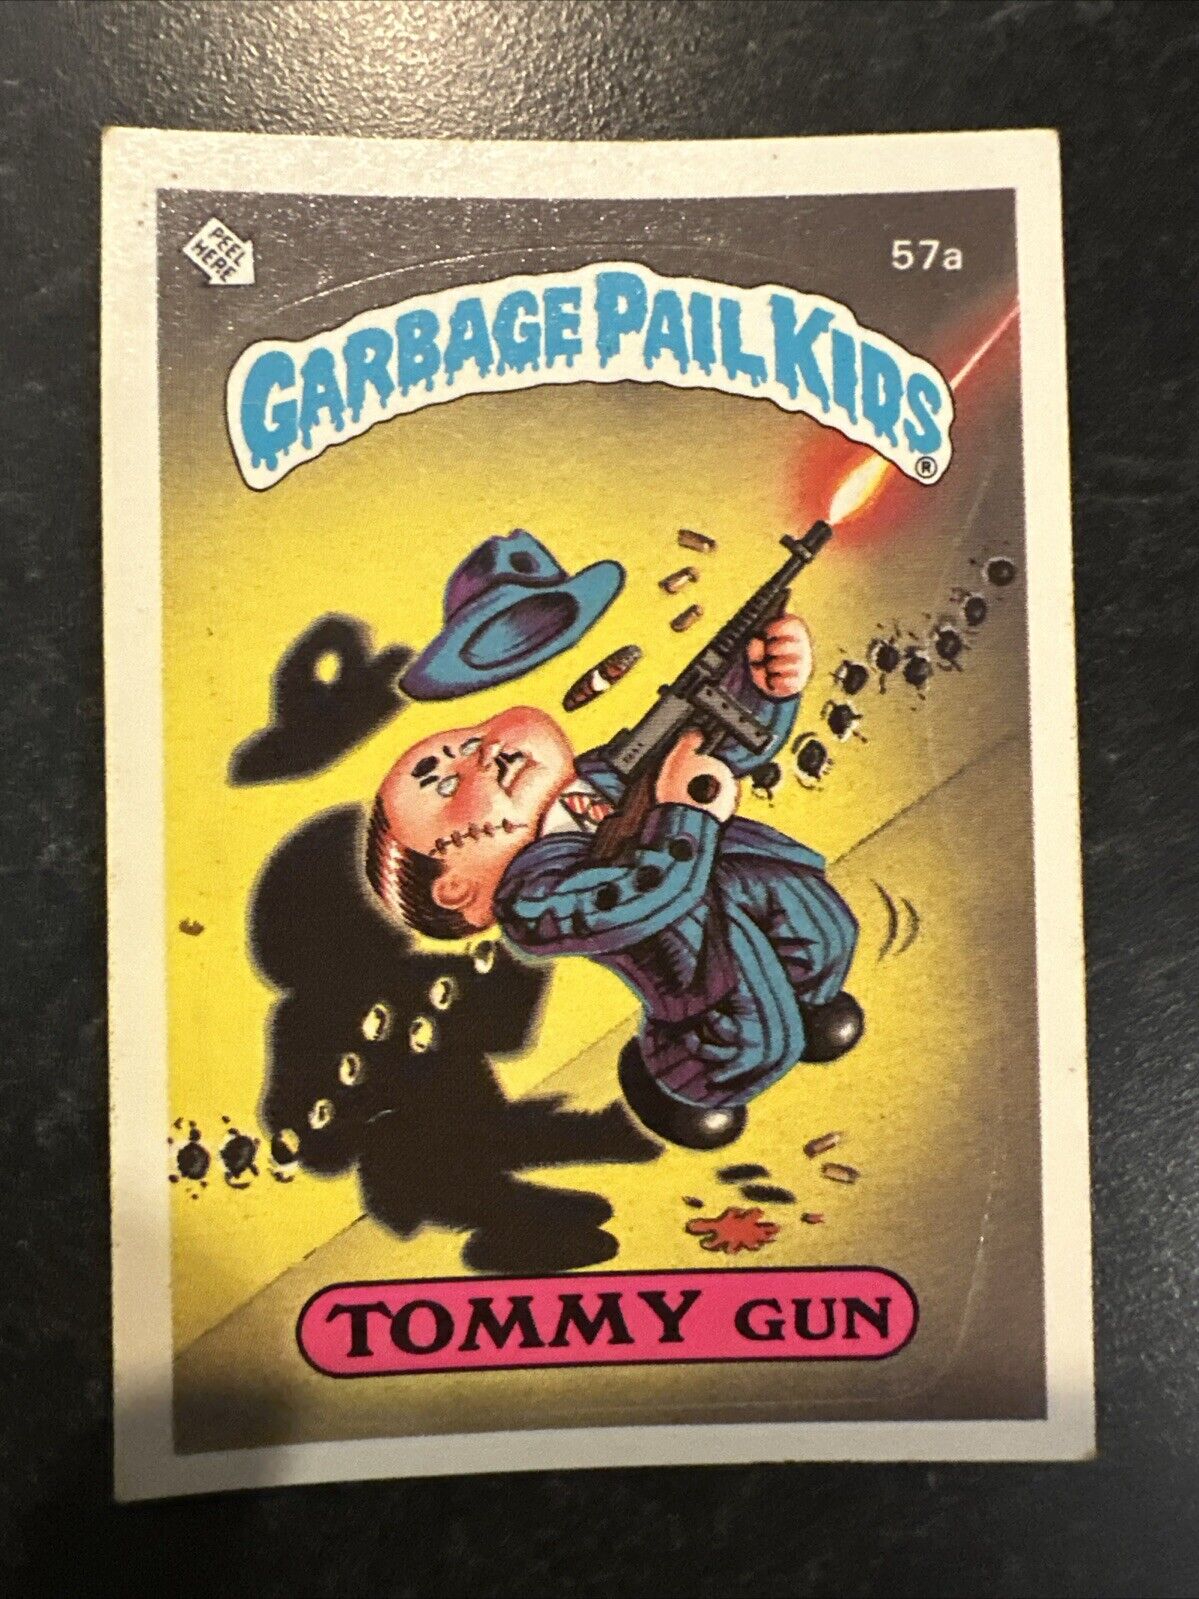 Vintage 1985 Topps Garbage Pail Kids Tommy Gun 57a Series 1 Trading Card